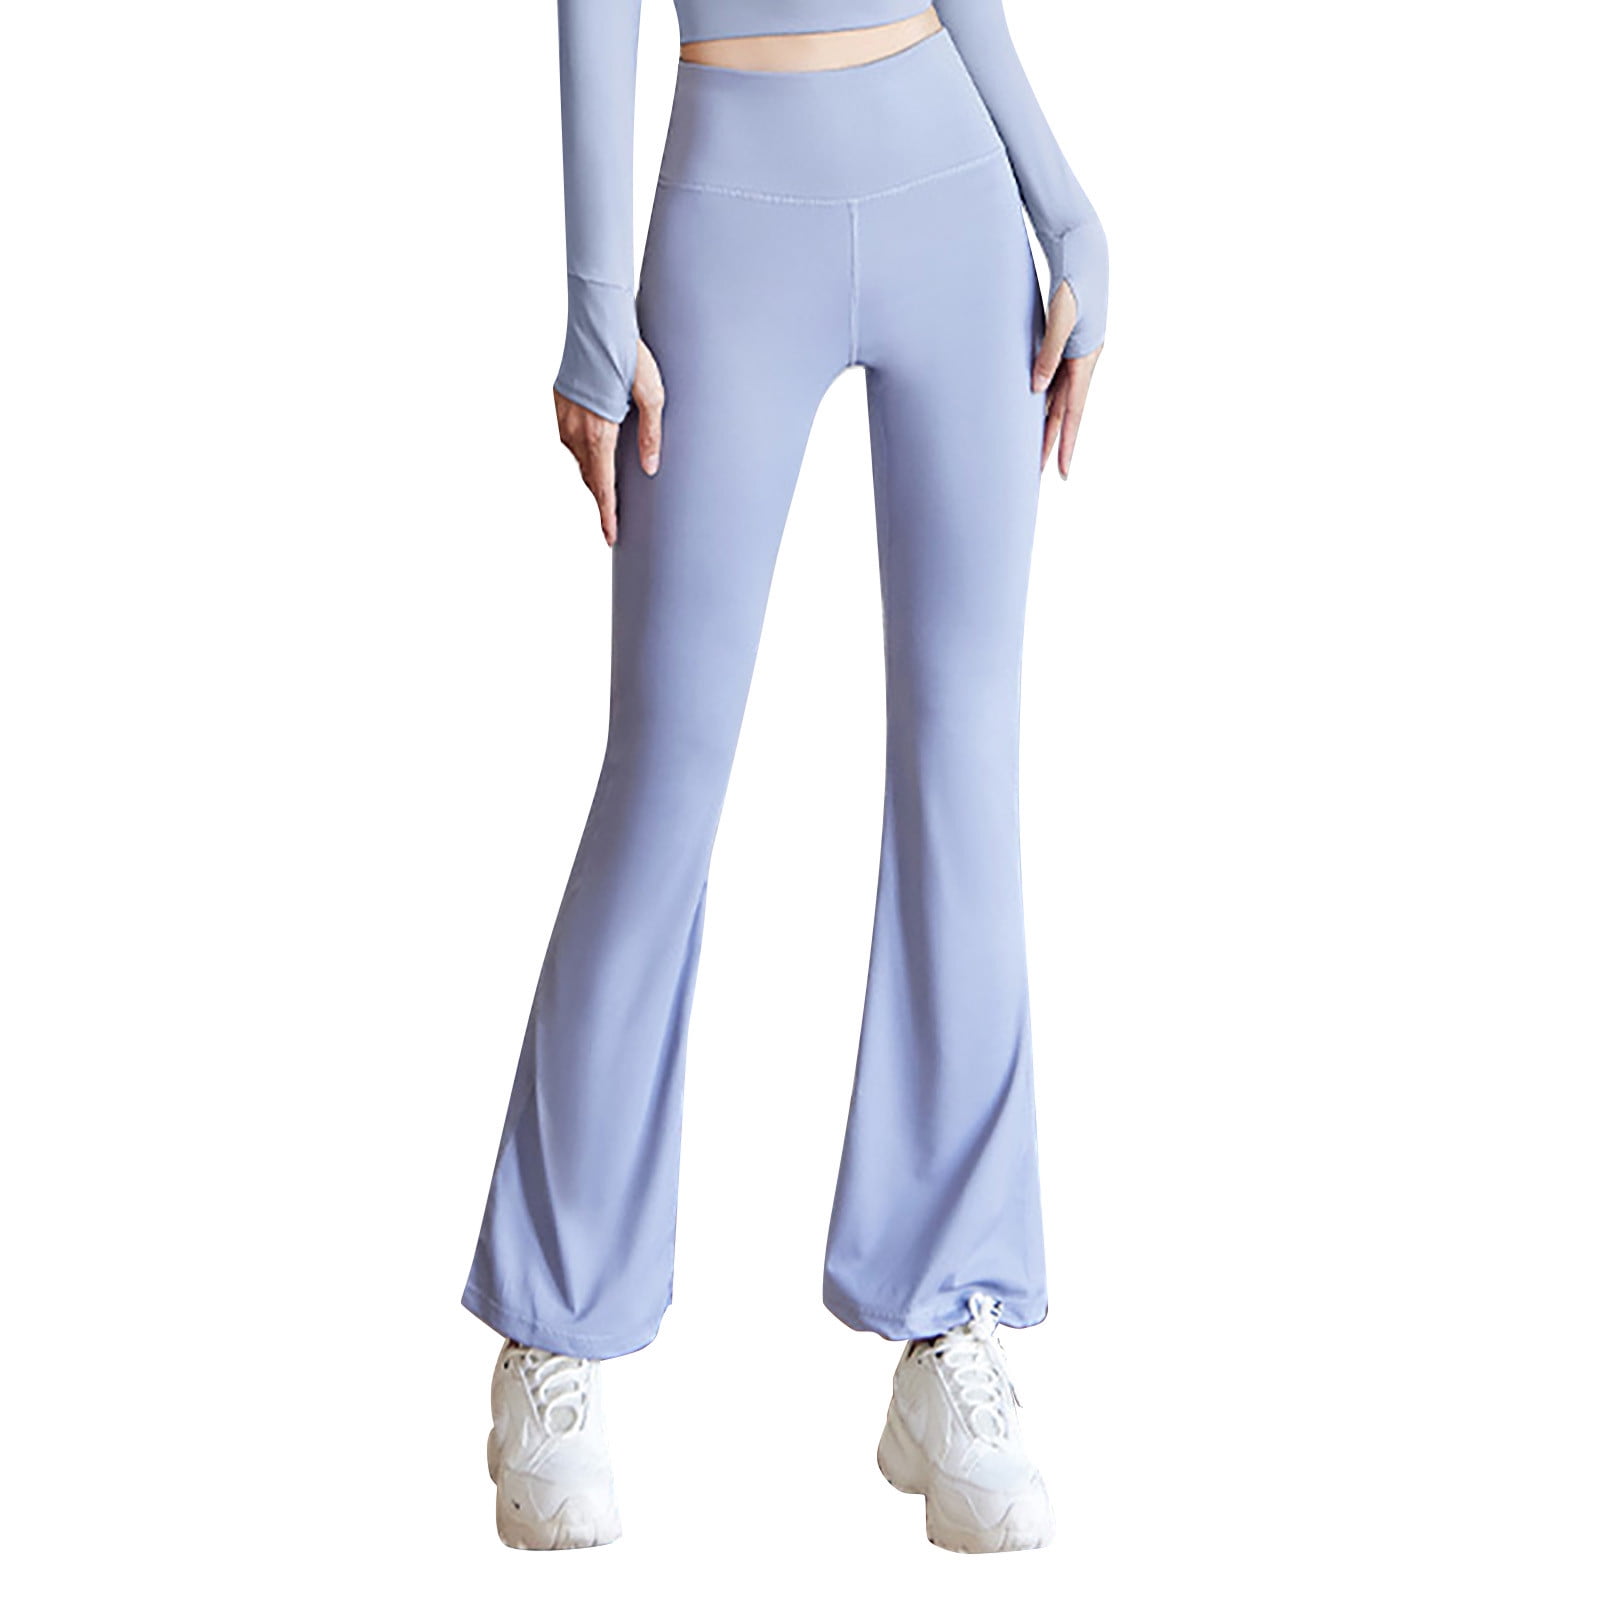 njshnmn Women Bootcut Yoga Pants with Pockets Leggings High Waist Yoga  Pants Workout Leggings Tights, Light Blue, S 